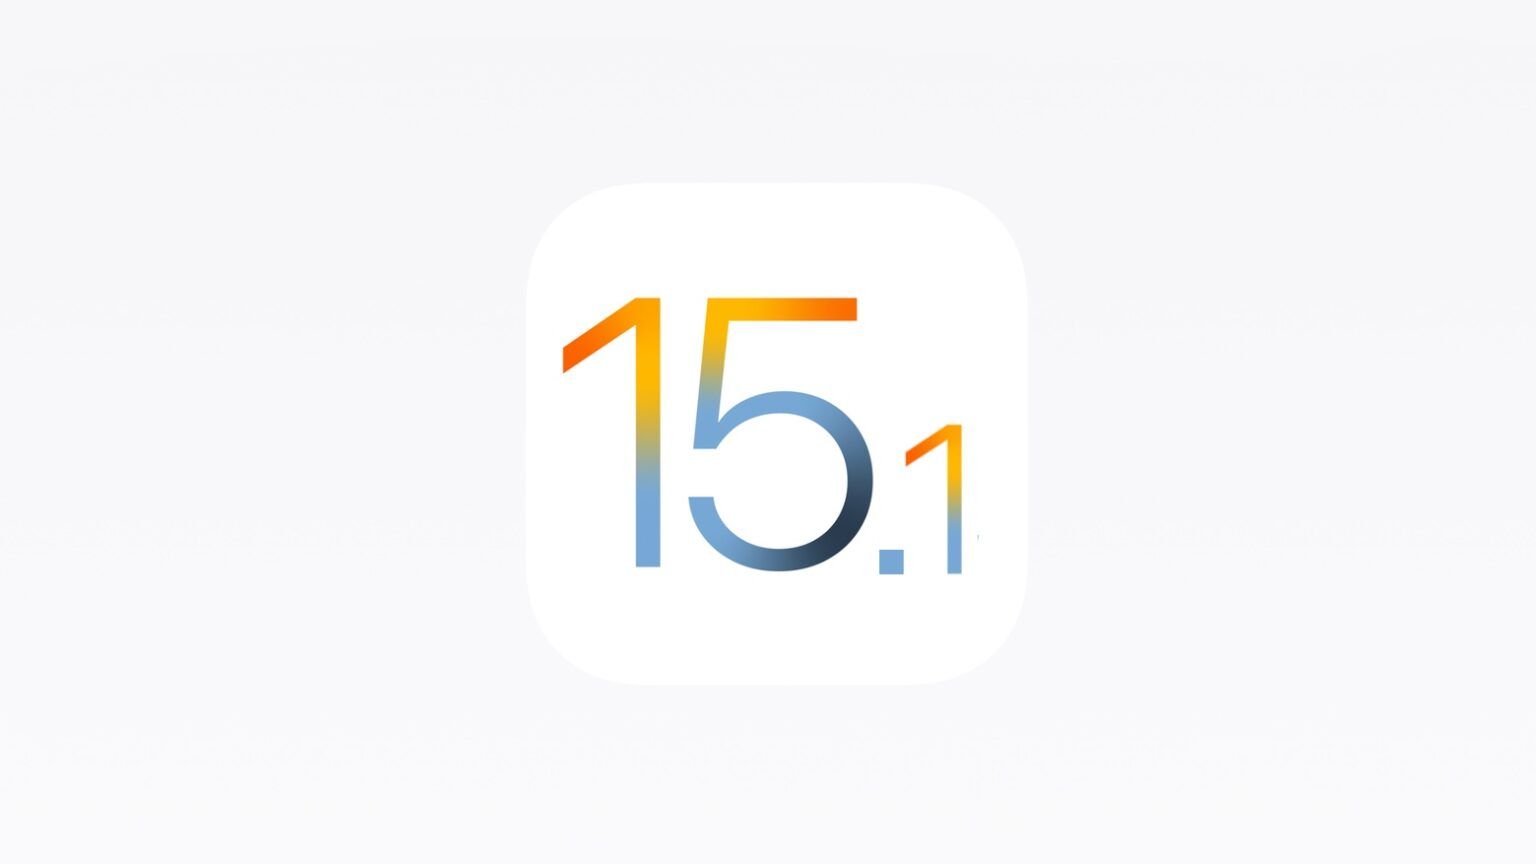 iOS/iPadOS 15.1, tvOS 15.1 e watchOS 8.1 disponíveis para download